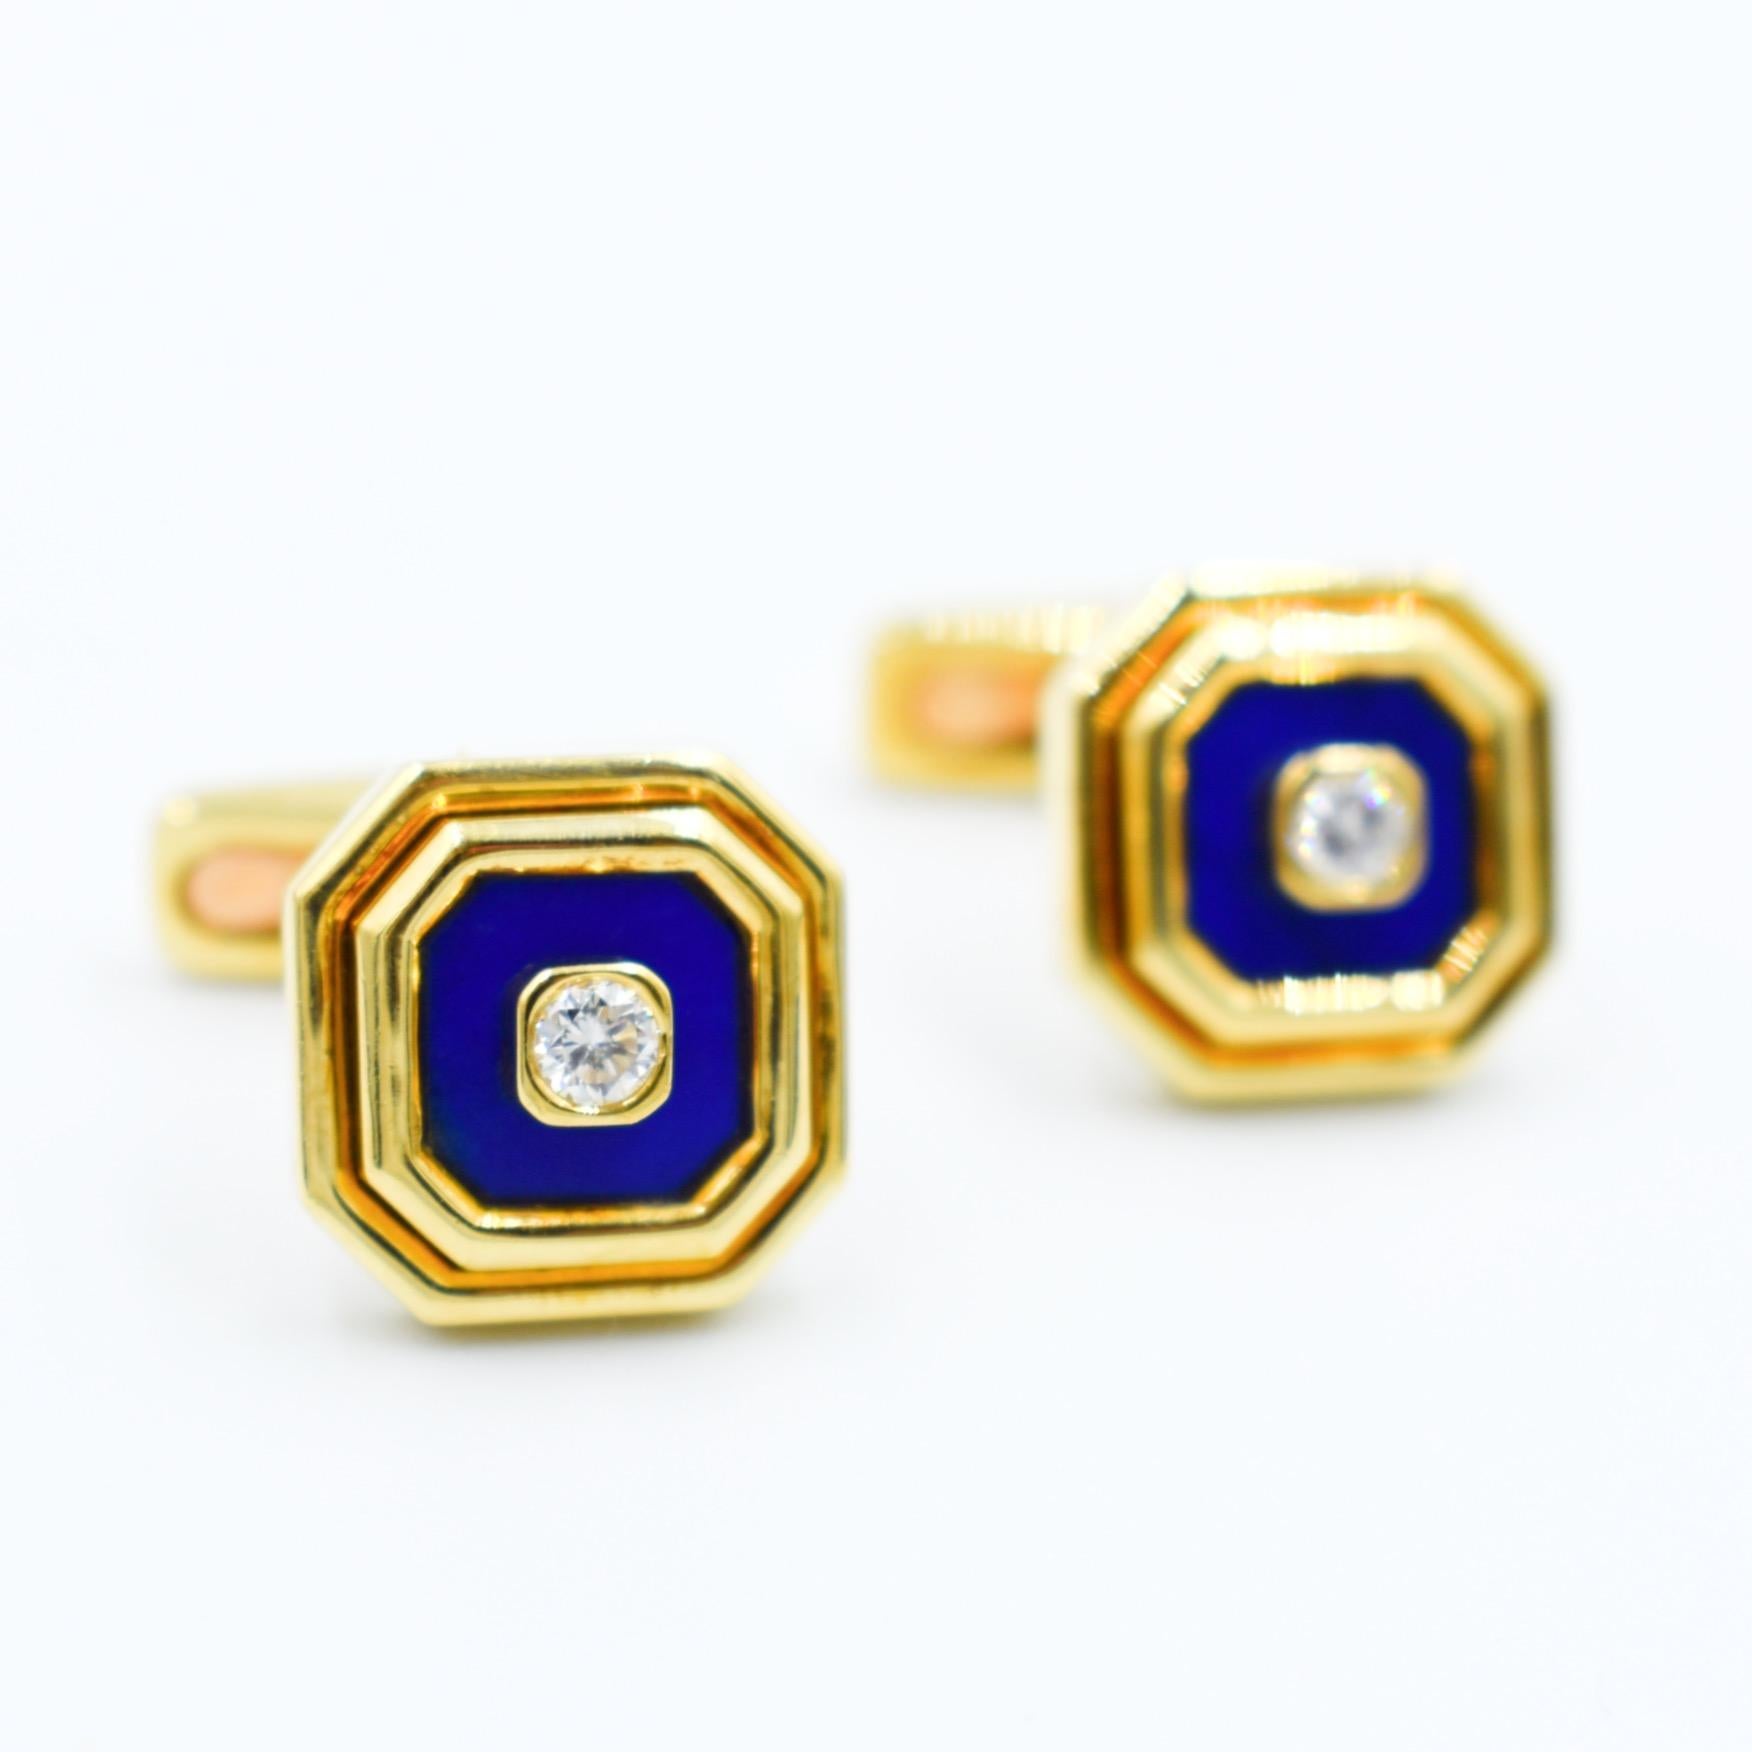 Men's Van Cleef & Arpels 18-Carat Gold Cufflinks with Lapis Lazuli and Diamonds For Sale